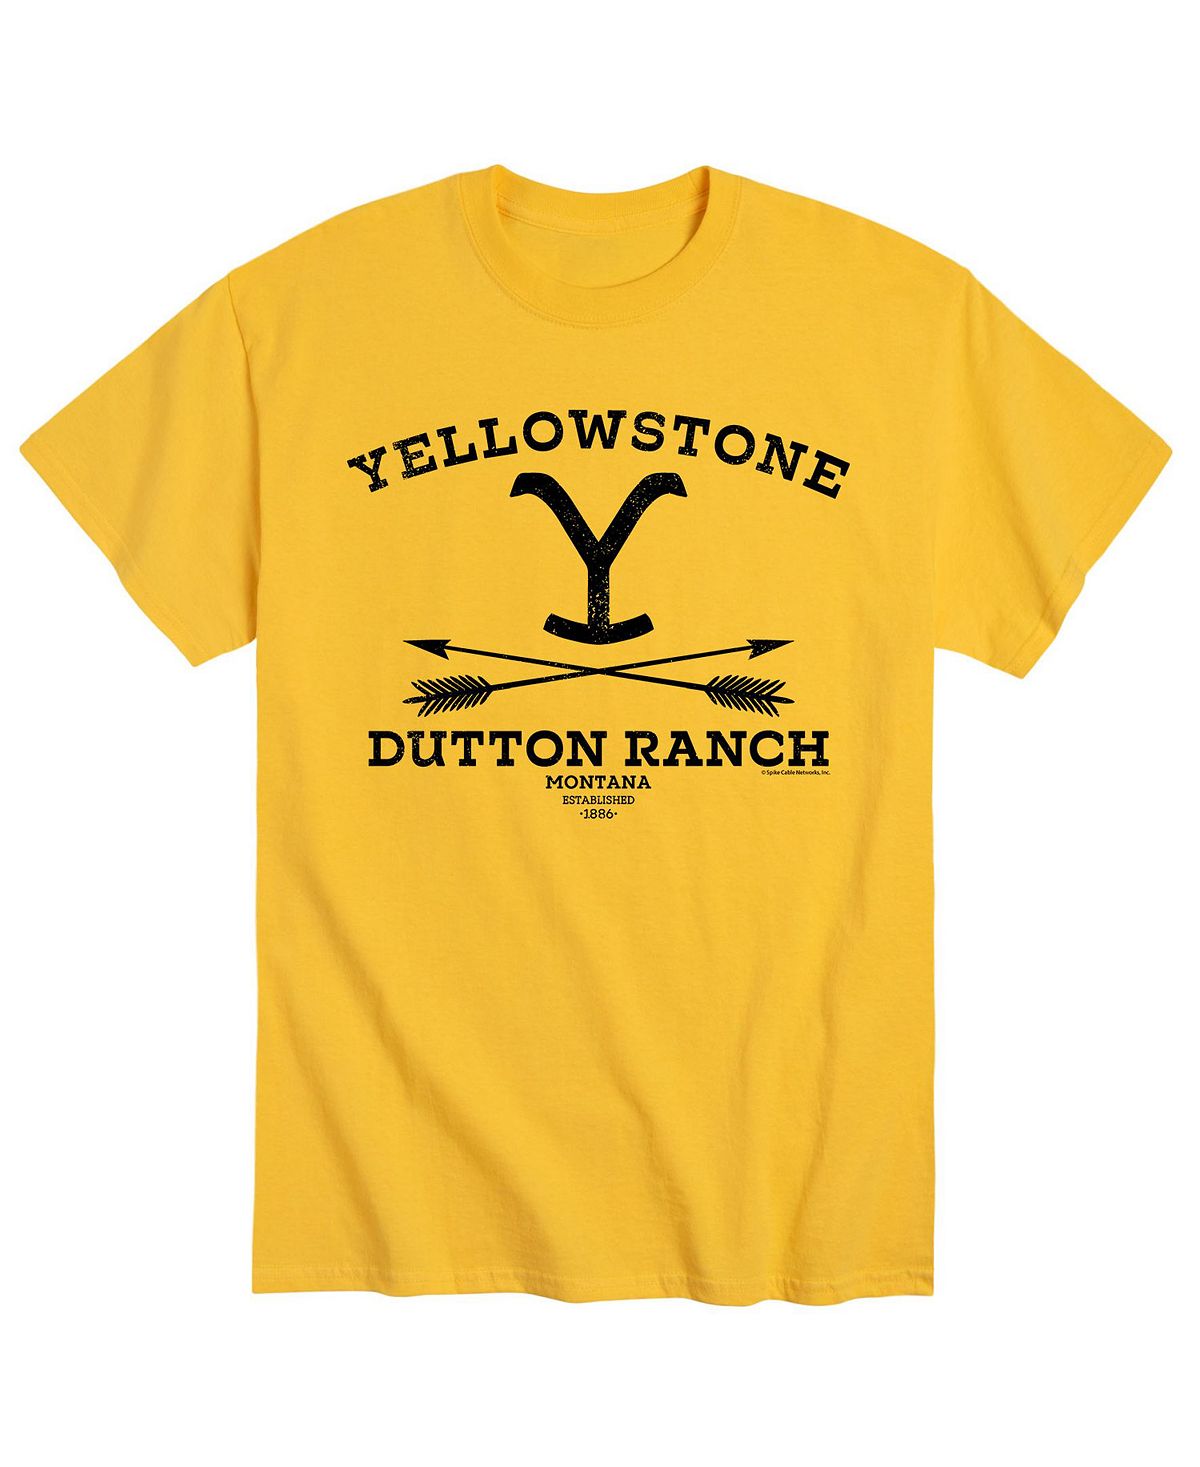 Мужская футболка yellowstone dutton ranch arrows AIRWAVES